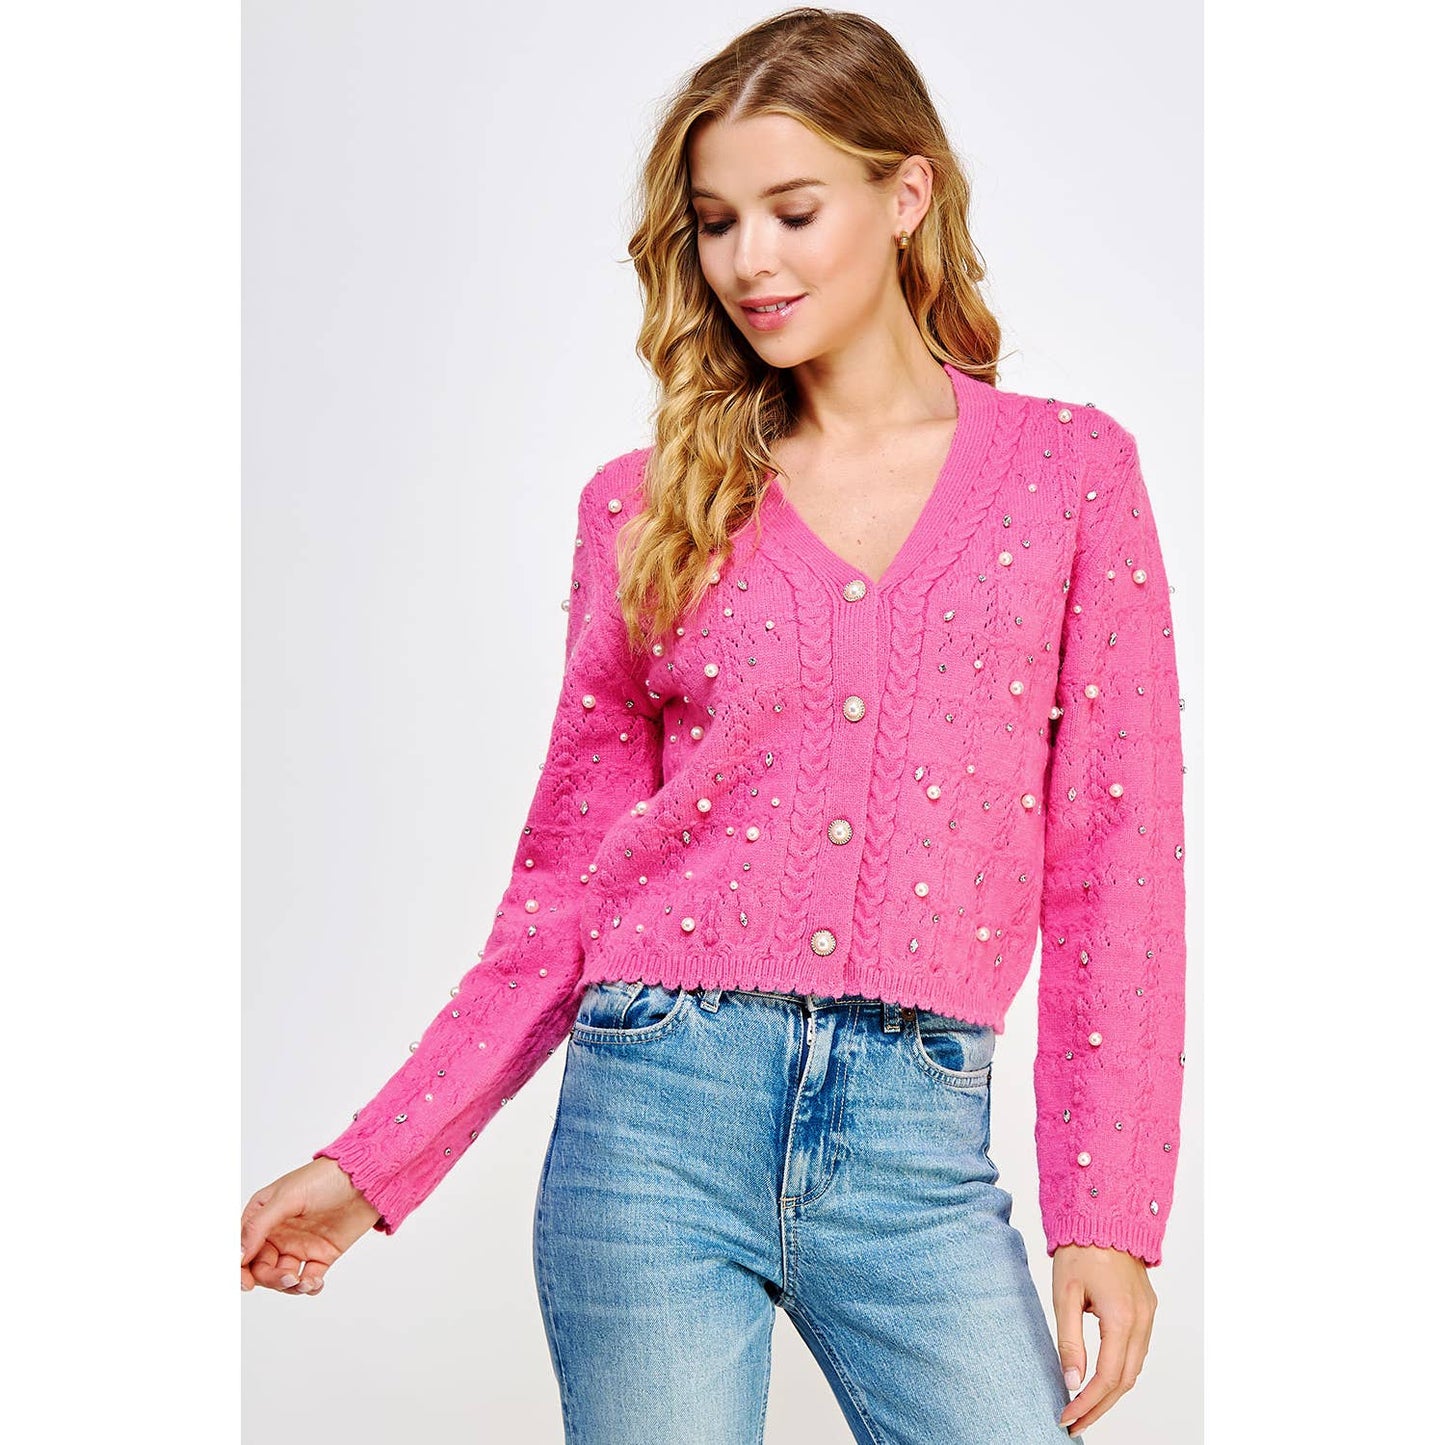 The "NOELLE" Pearl & Rhinestone Embellished Sweater in Pink